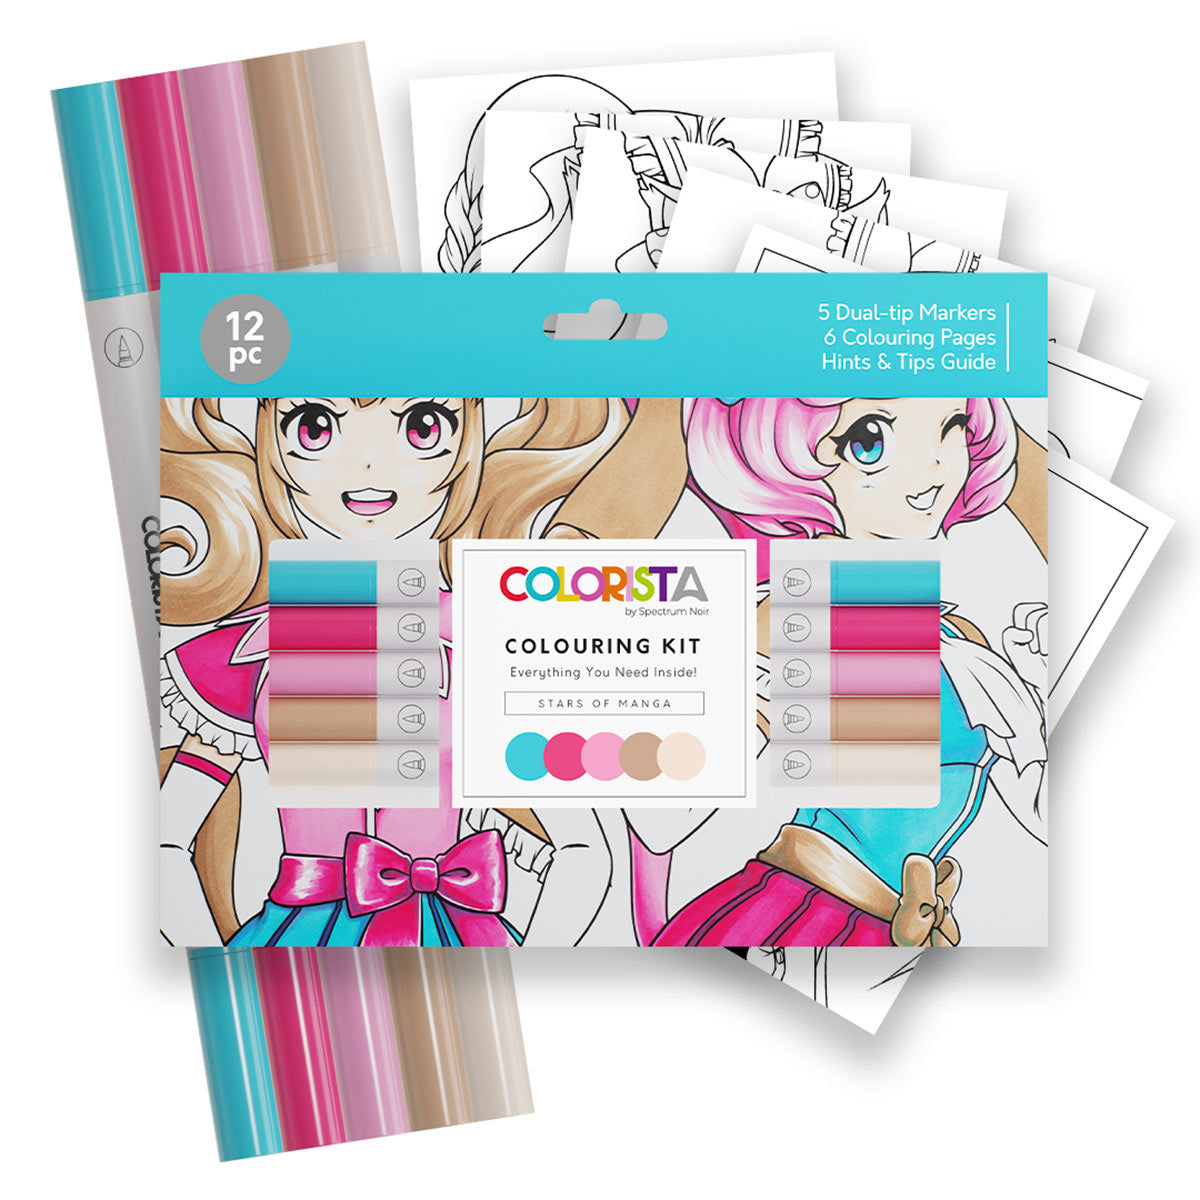 Spectrum Noir Colorista - Colouring Kit - Dual-tip Alcohol Brush Markers  - Stars of Manga